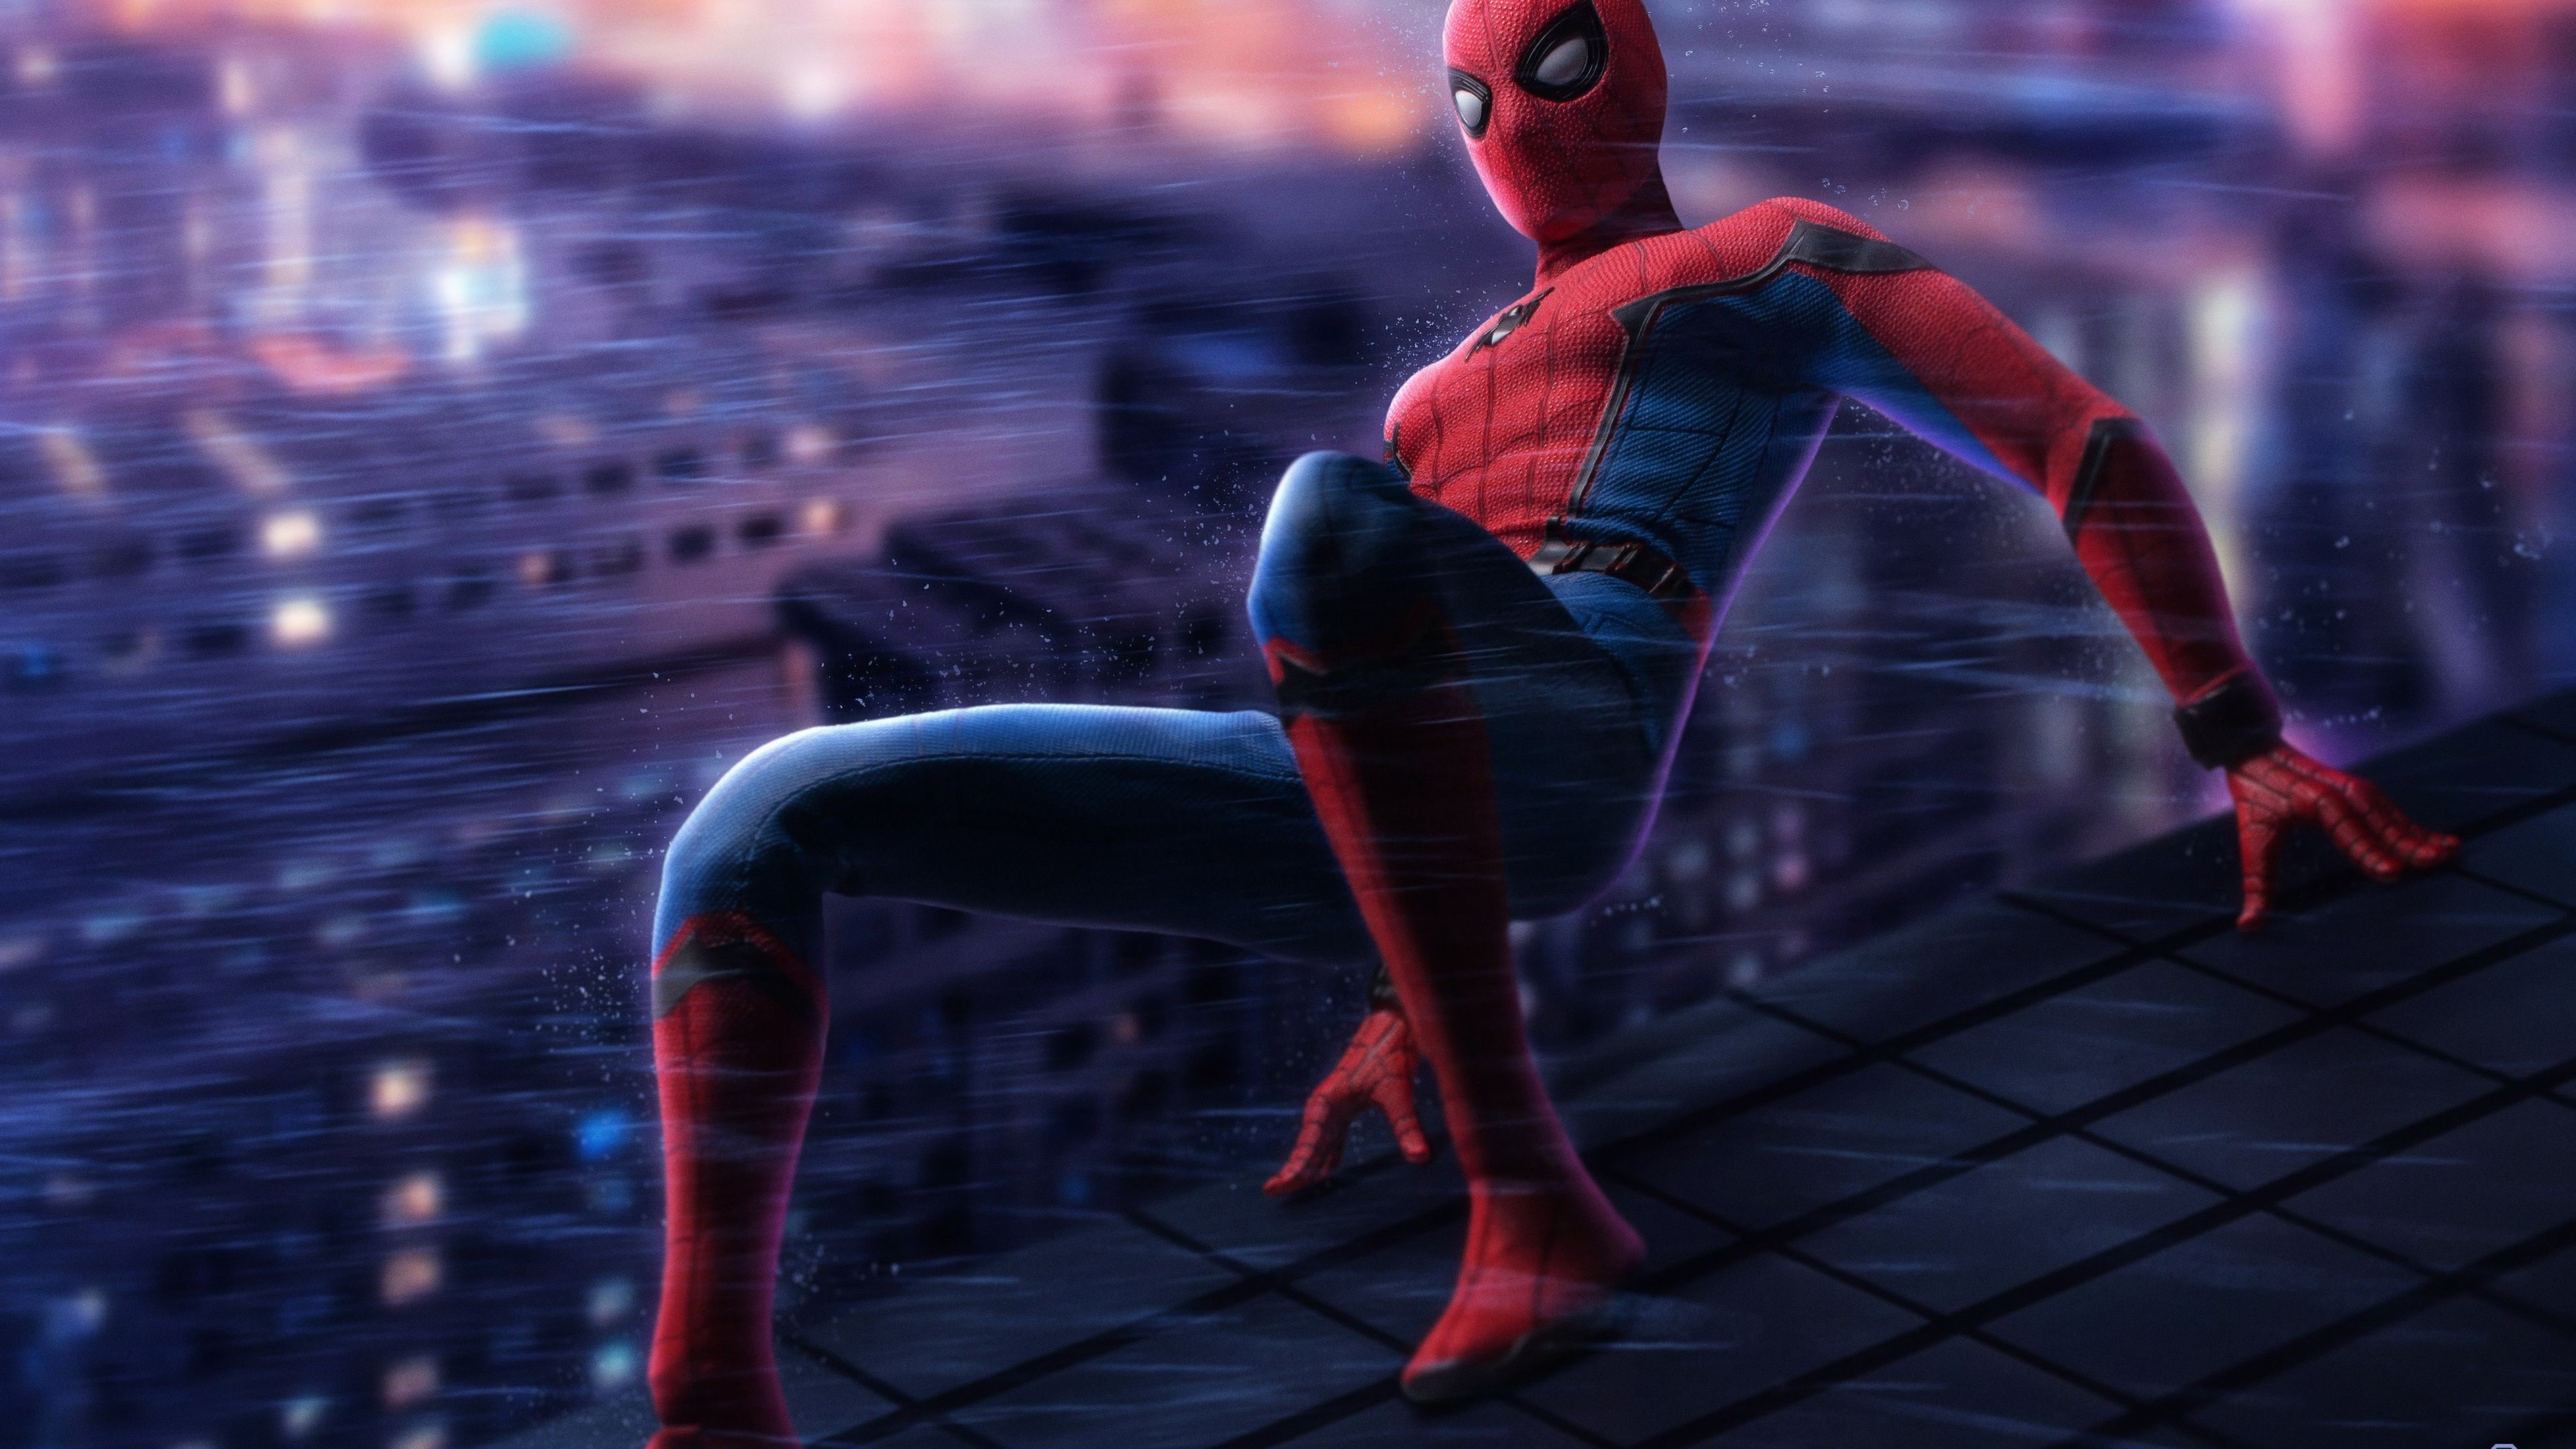 Spiderman On The Wall 5k Superheroes Wallpaper